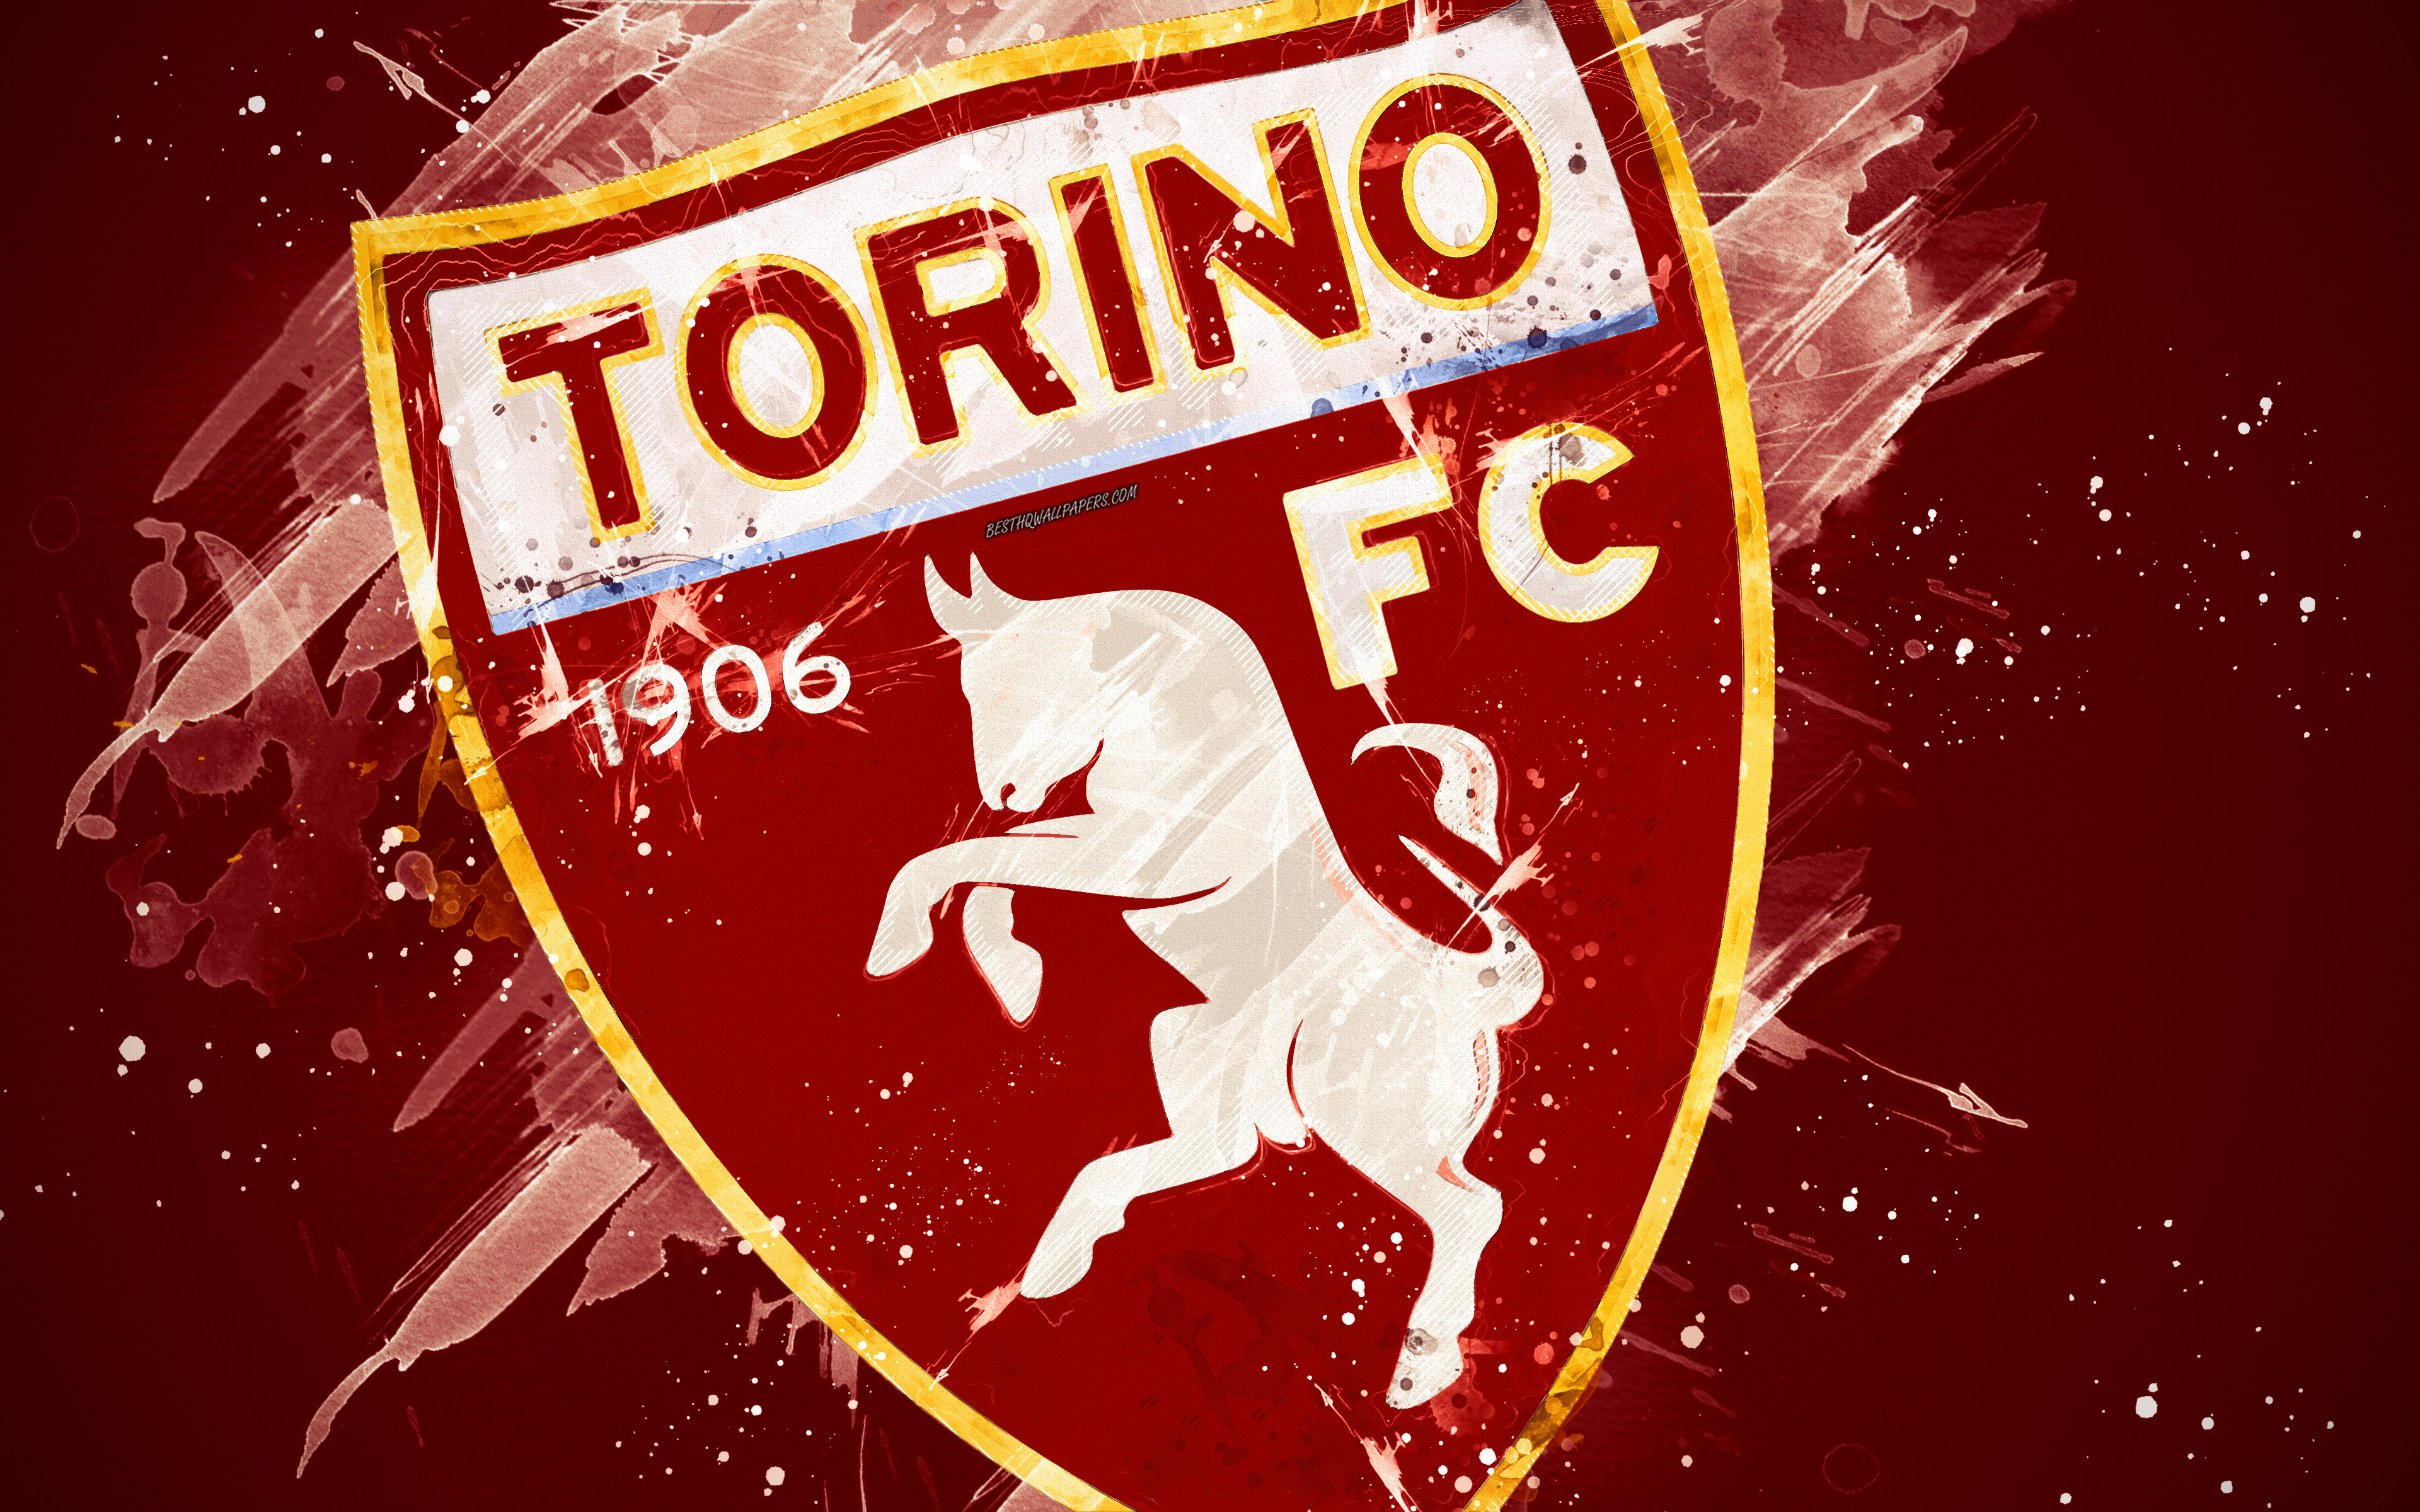 Logo Sfondi Torino Fc